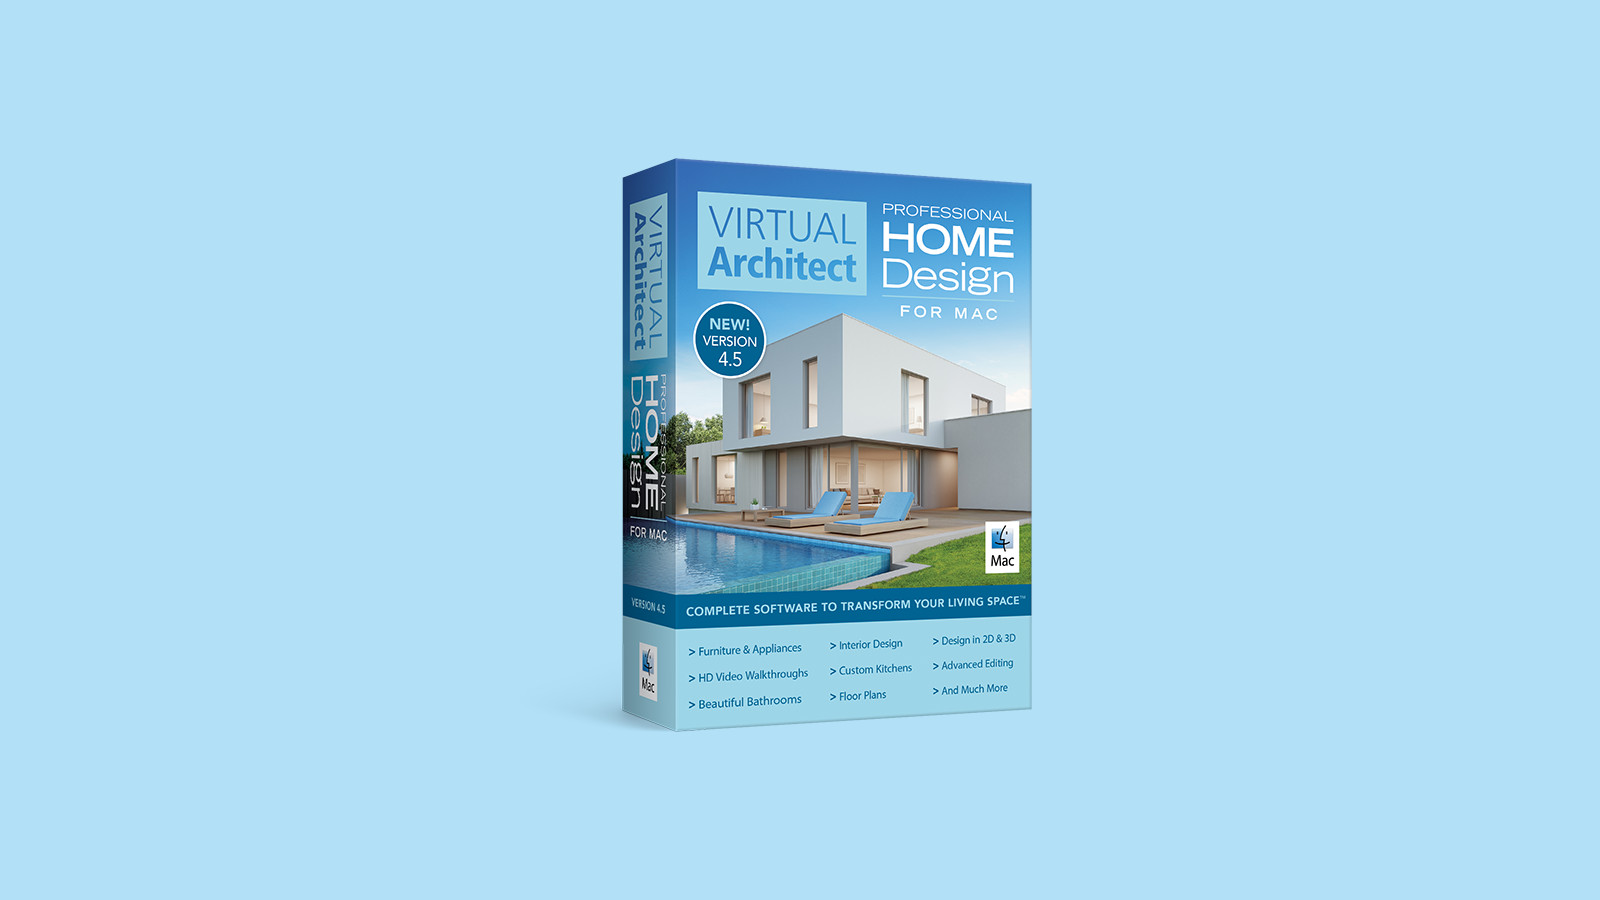 Virtual Architect Professional Home Design for Mac CD Key, 64.8$